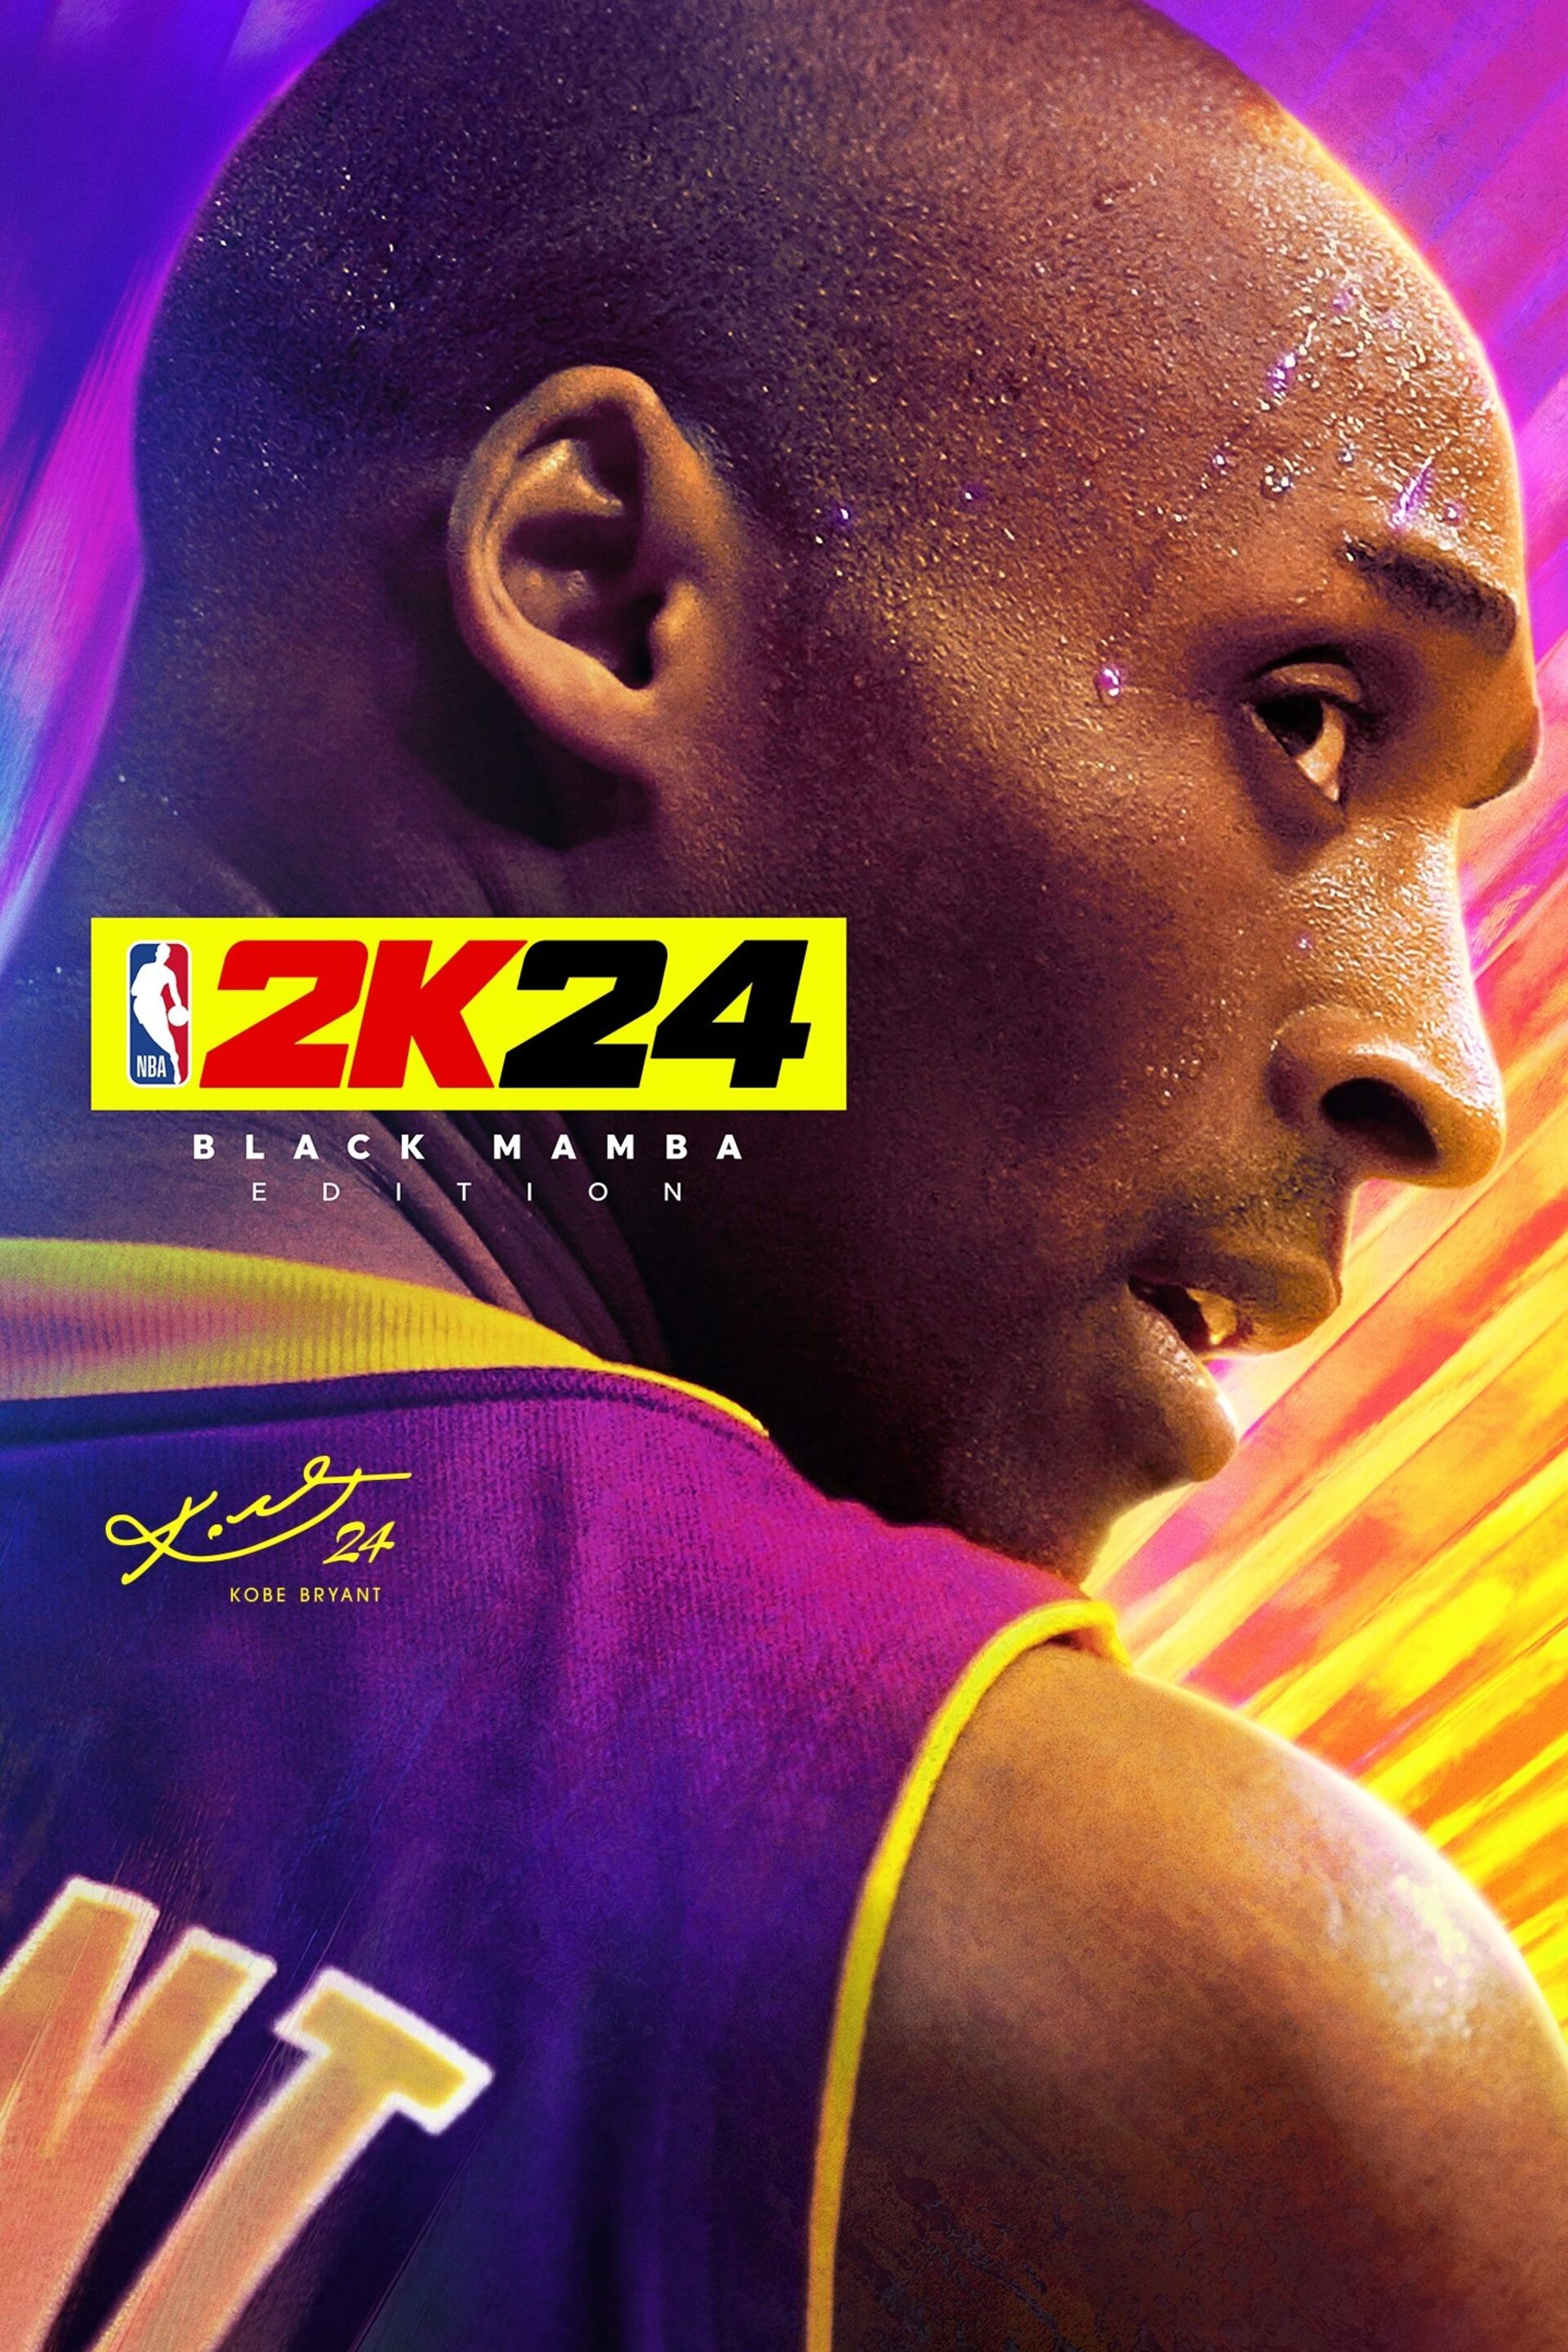 Buy NBA 2K21 Steam PC Key 